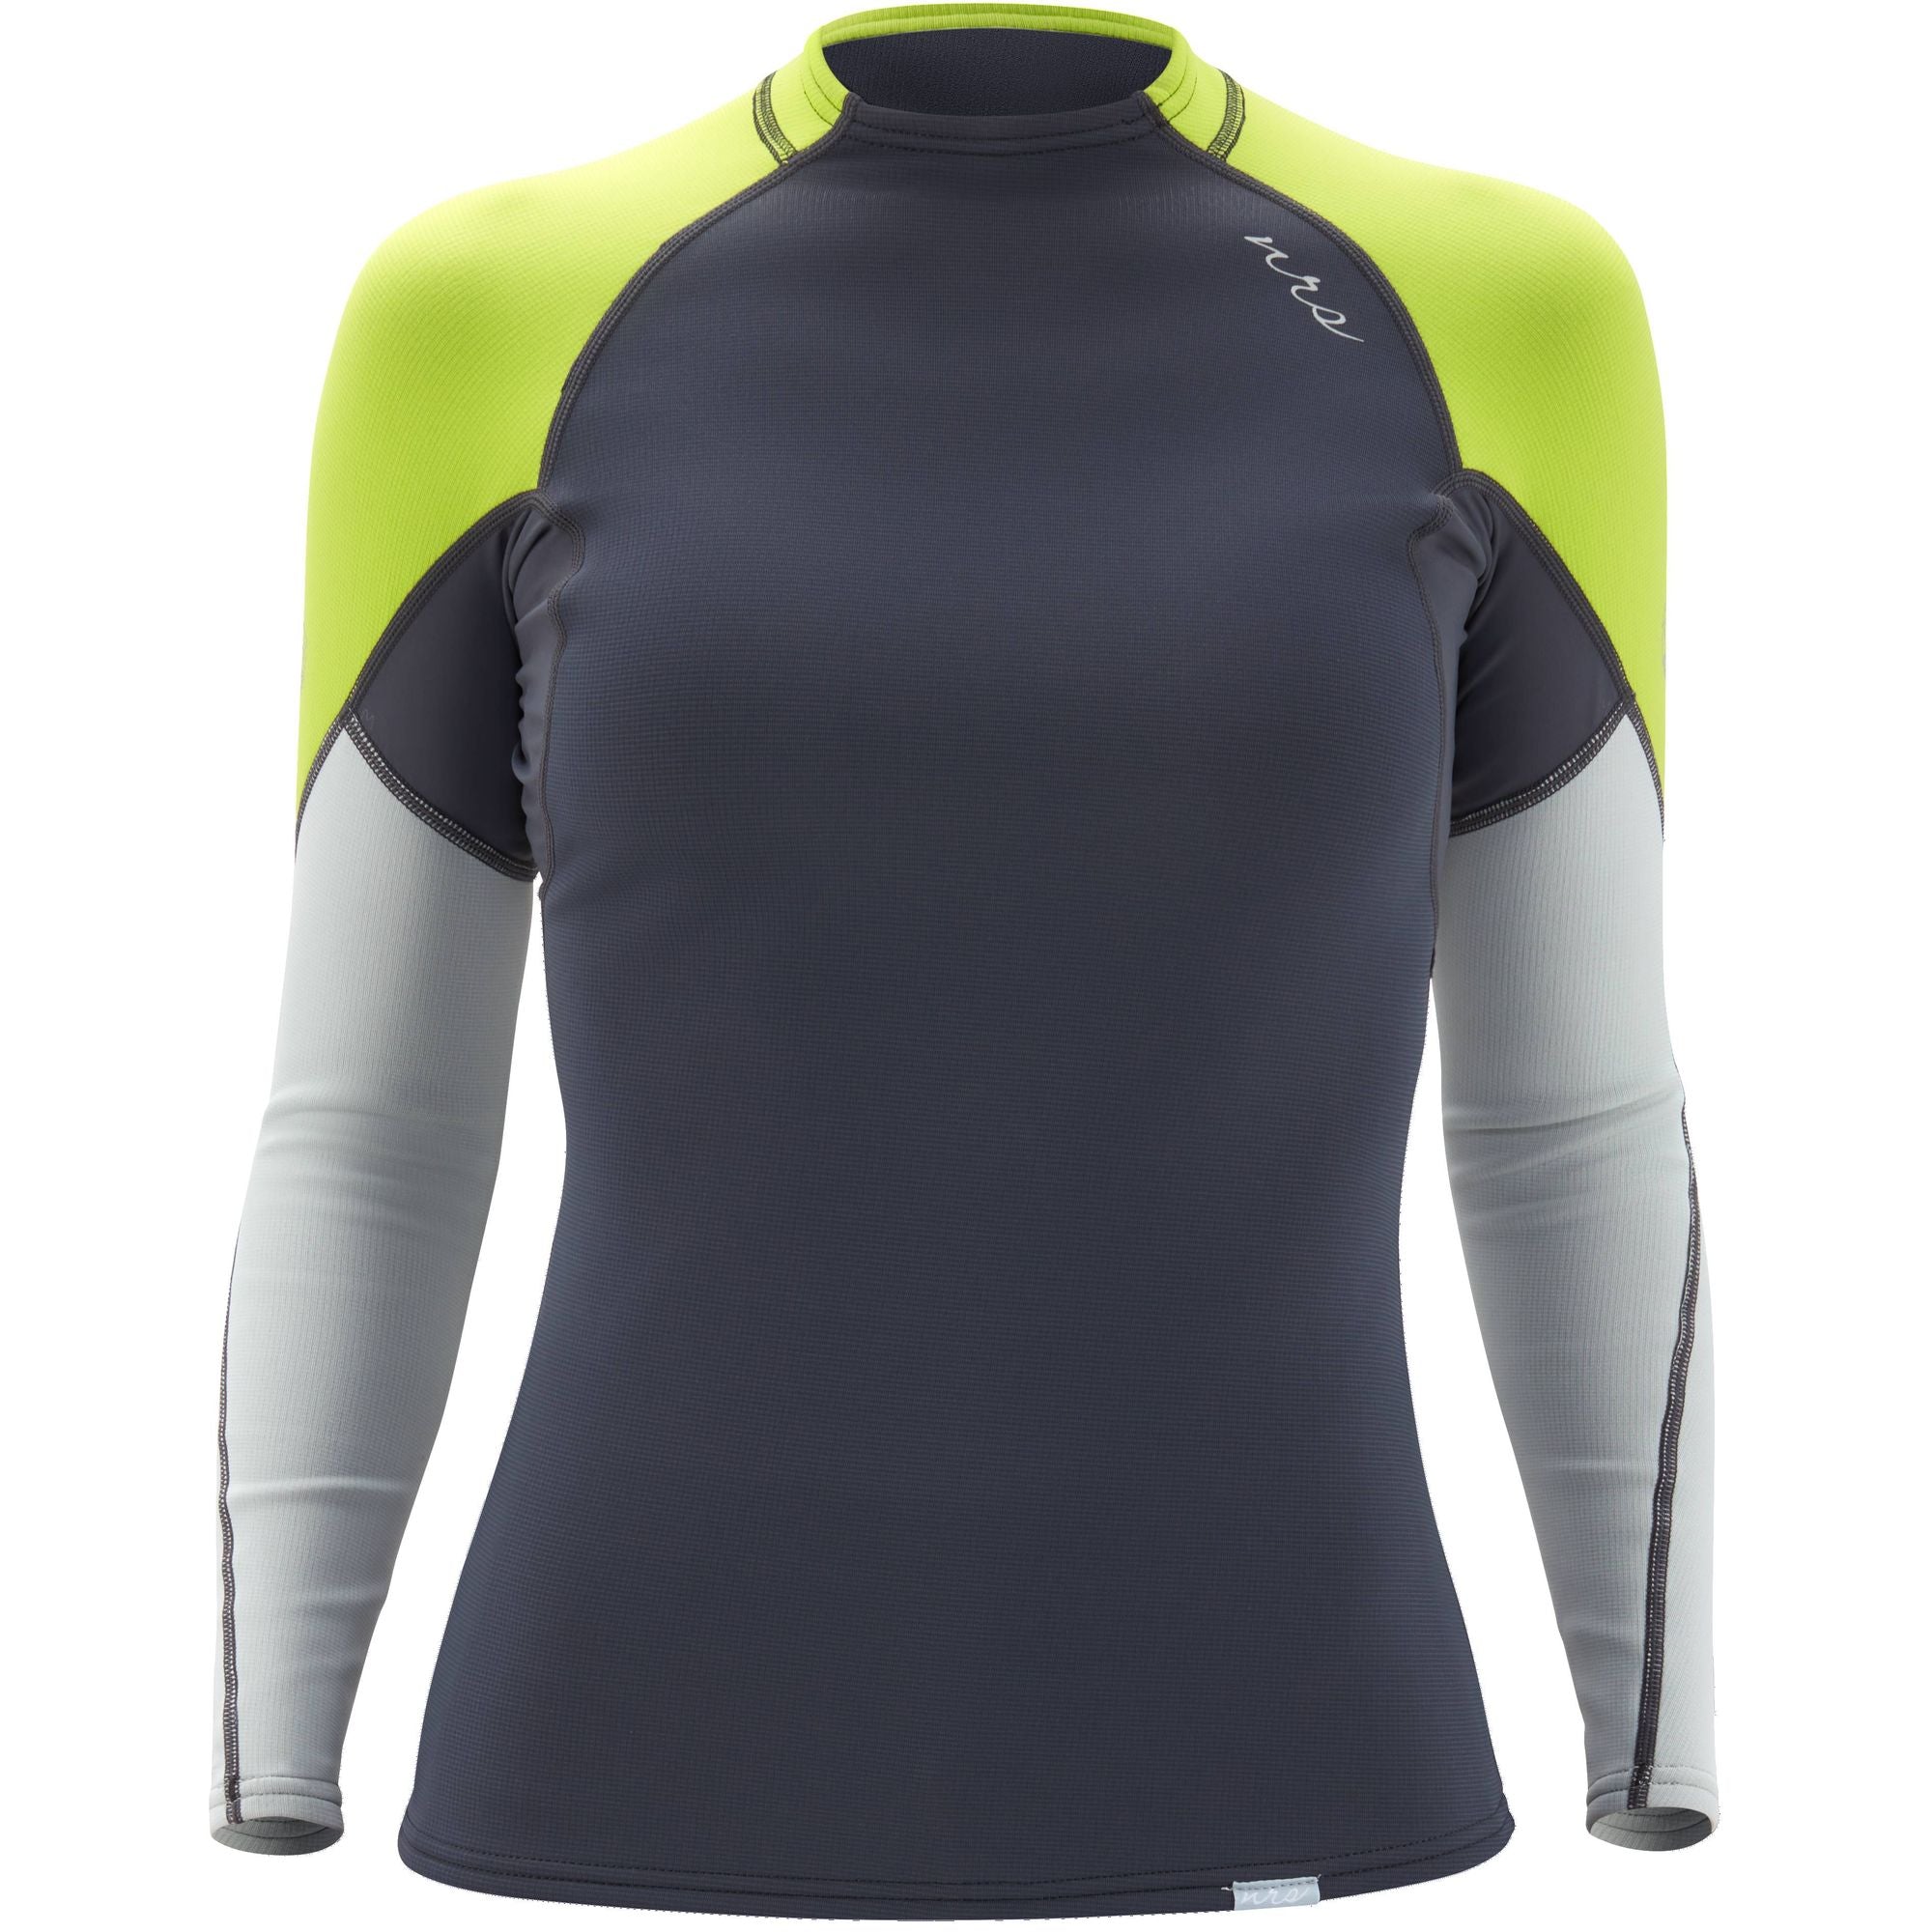 NRS - Women's HydroSkin 0.5 Long-Sleeve Shirt